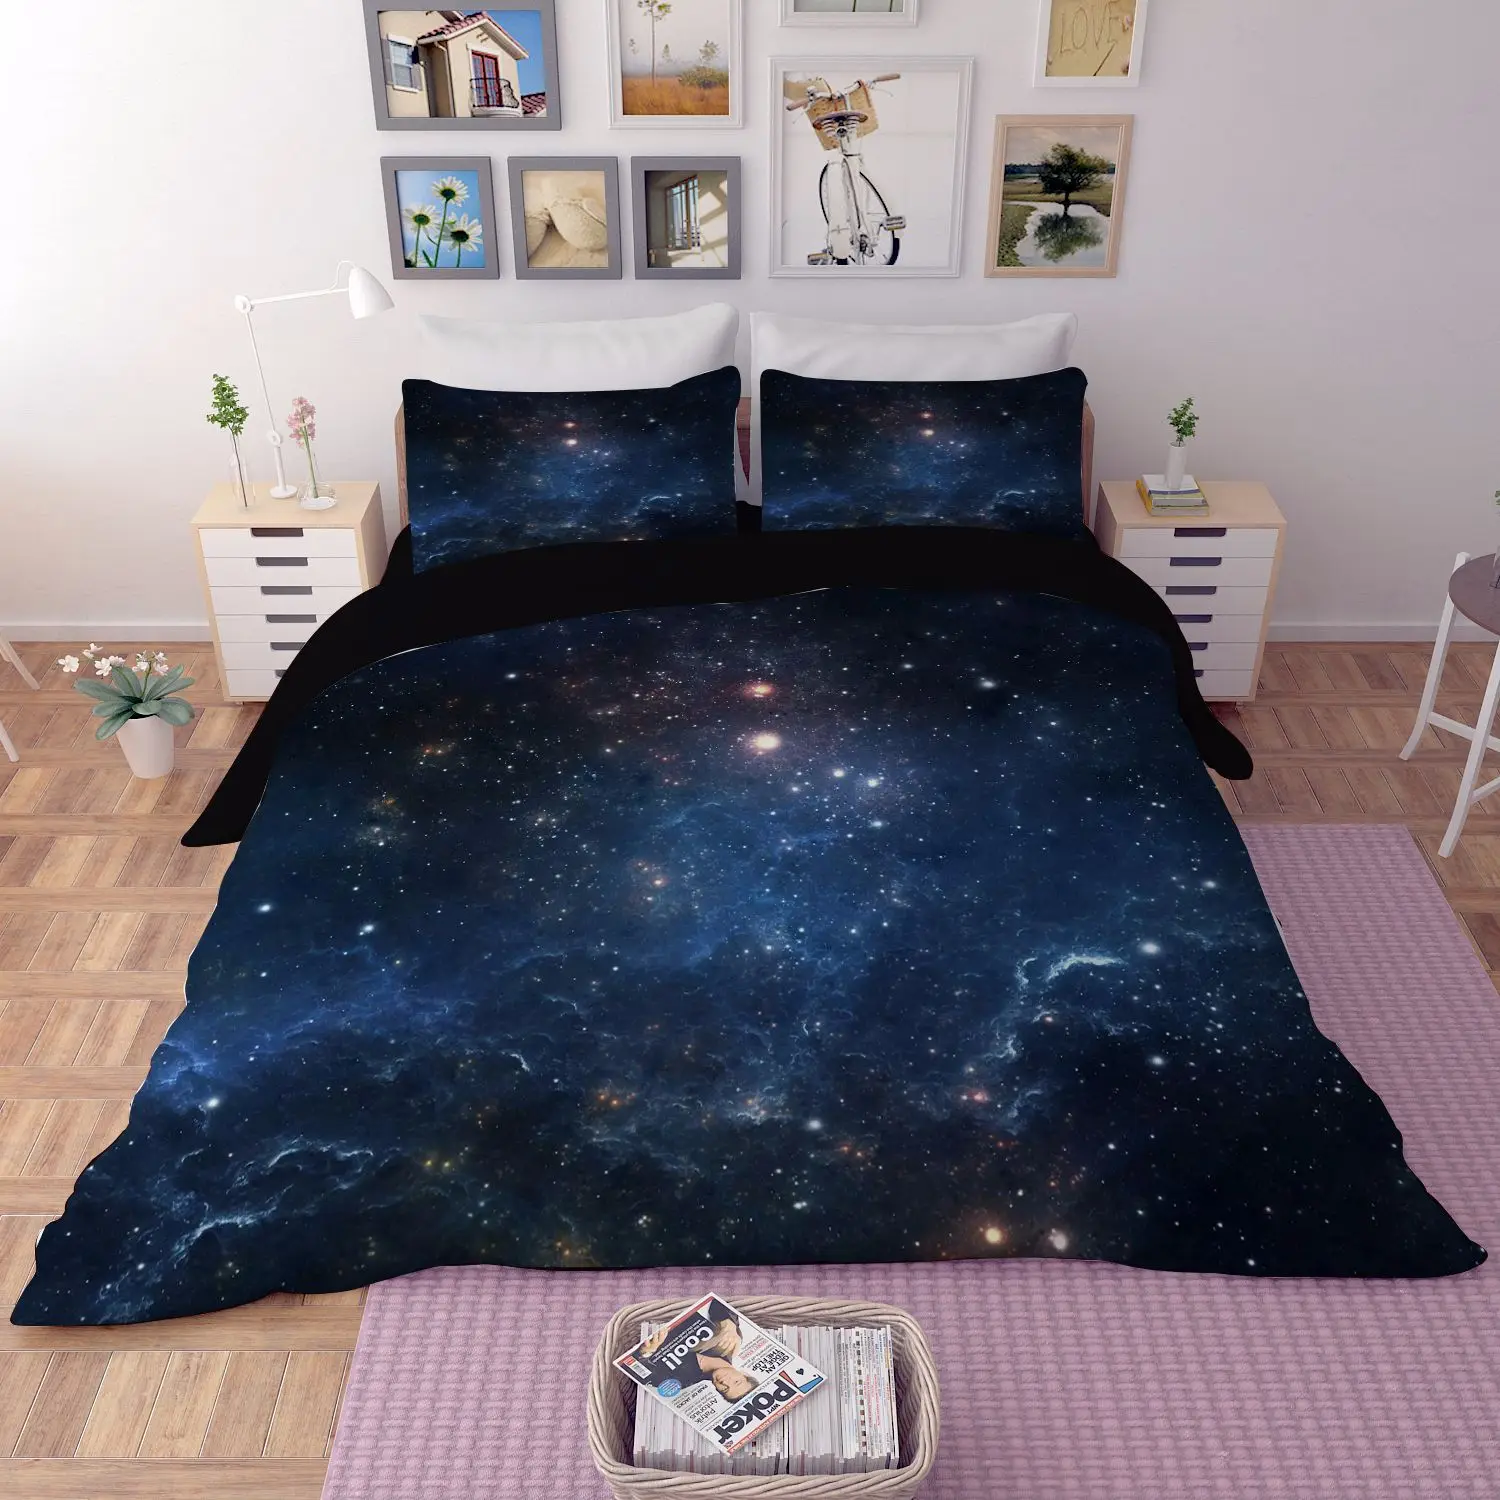 3d Galaxy Print Bedding Set Duvet Covers Pillowcases One Piece Comforter Bedding Sets Bedclothes Bed Linen 